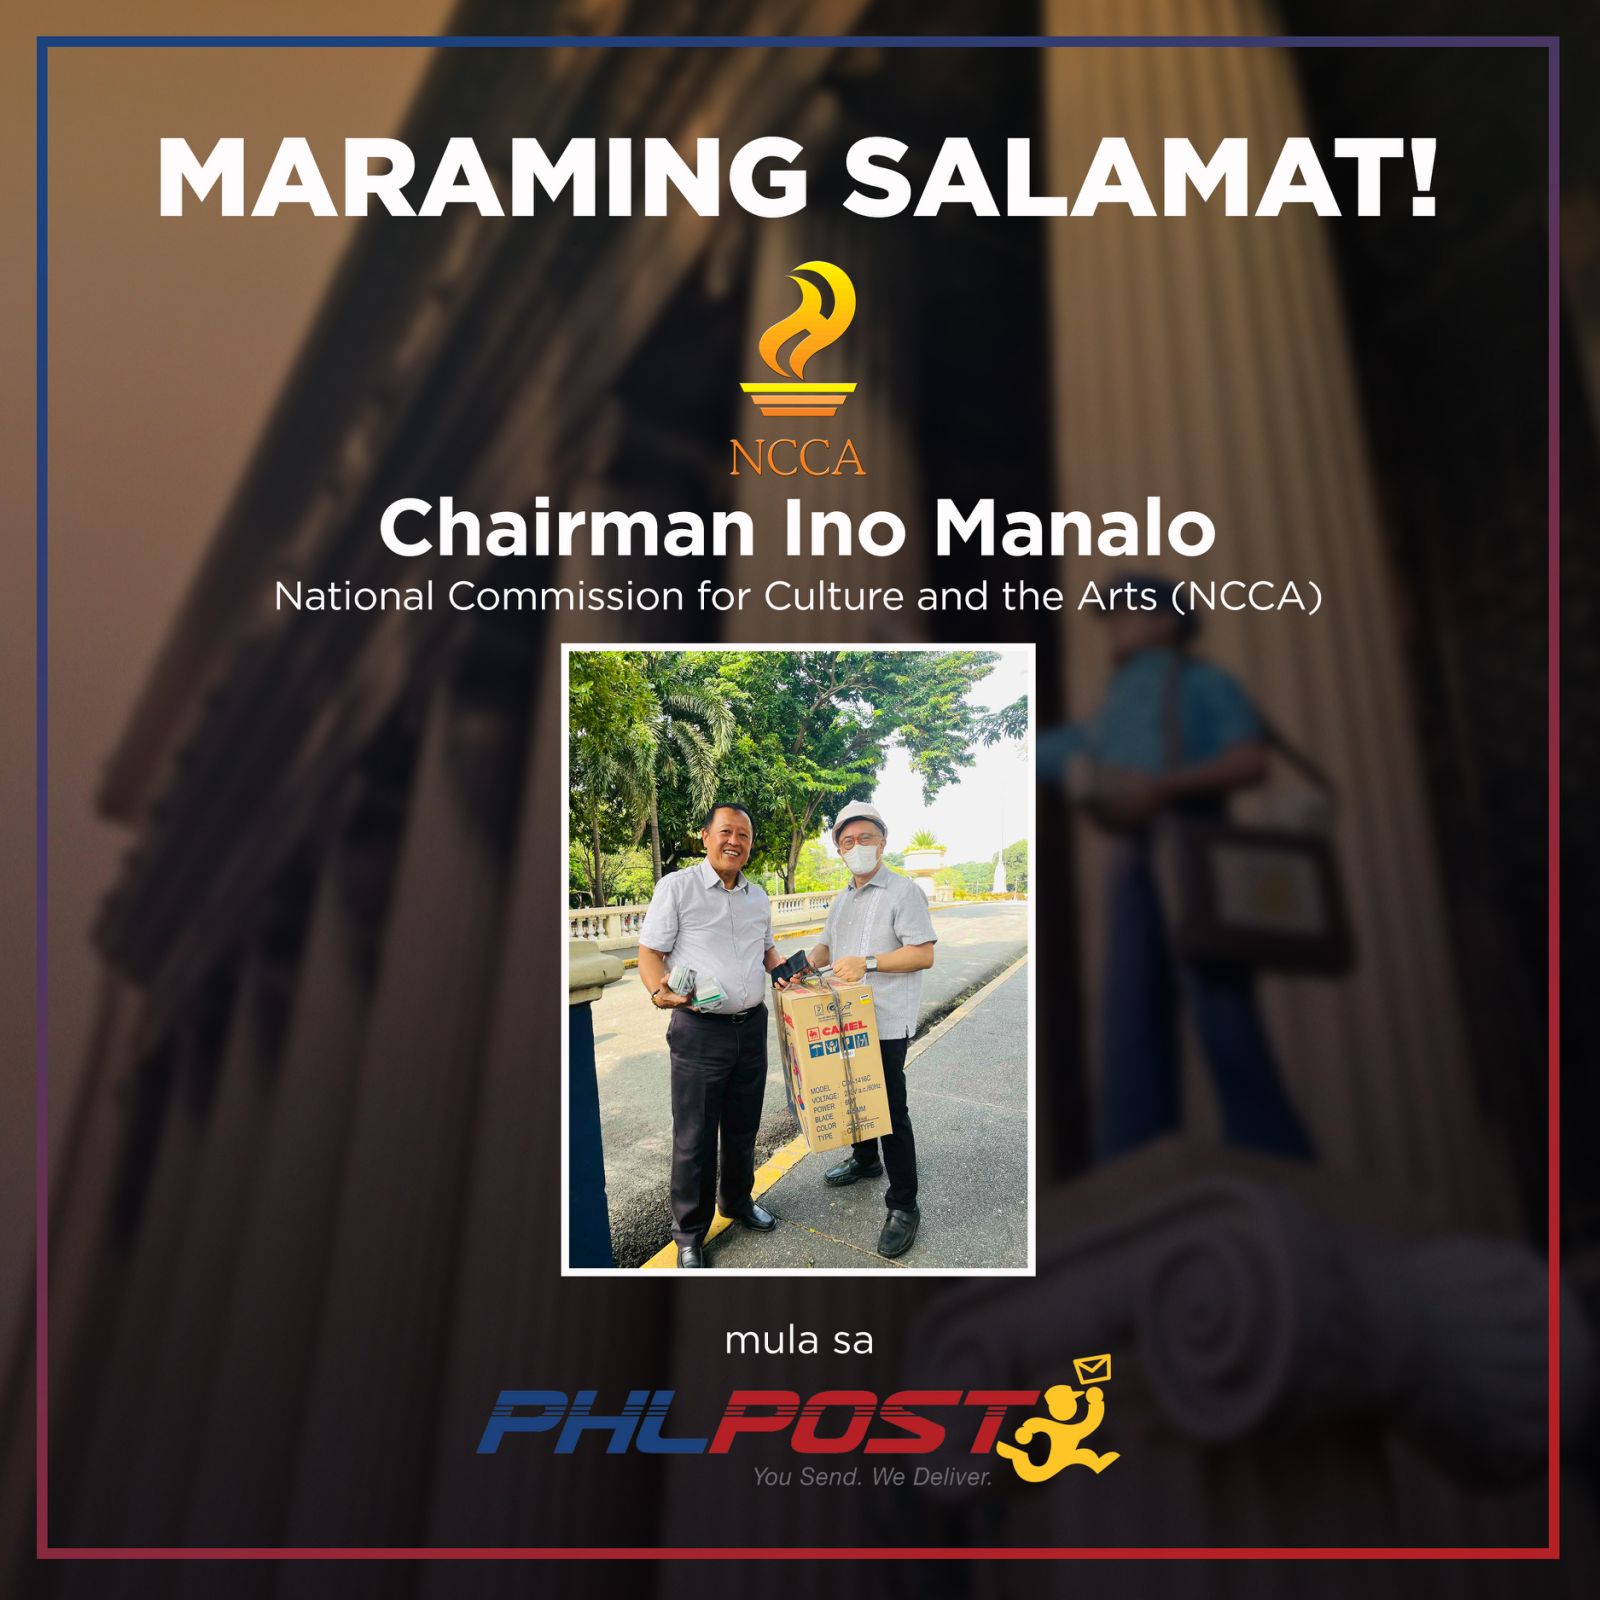 MARAMING SALAMAT NCCA Chairman Ino Manalo